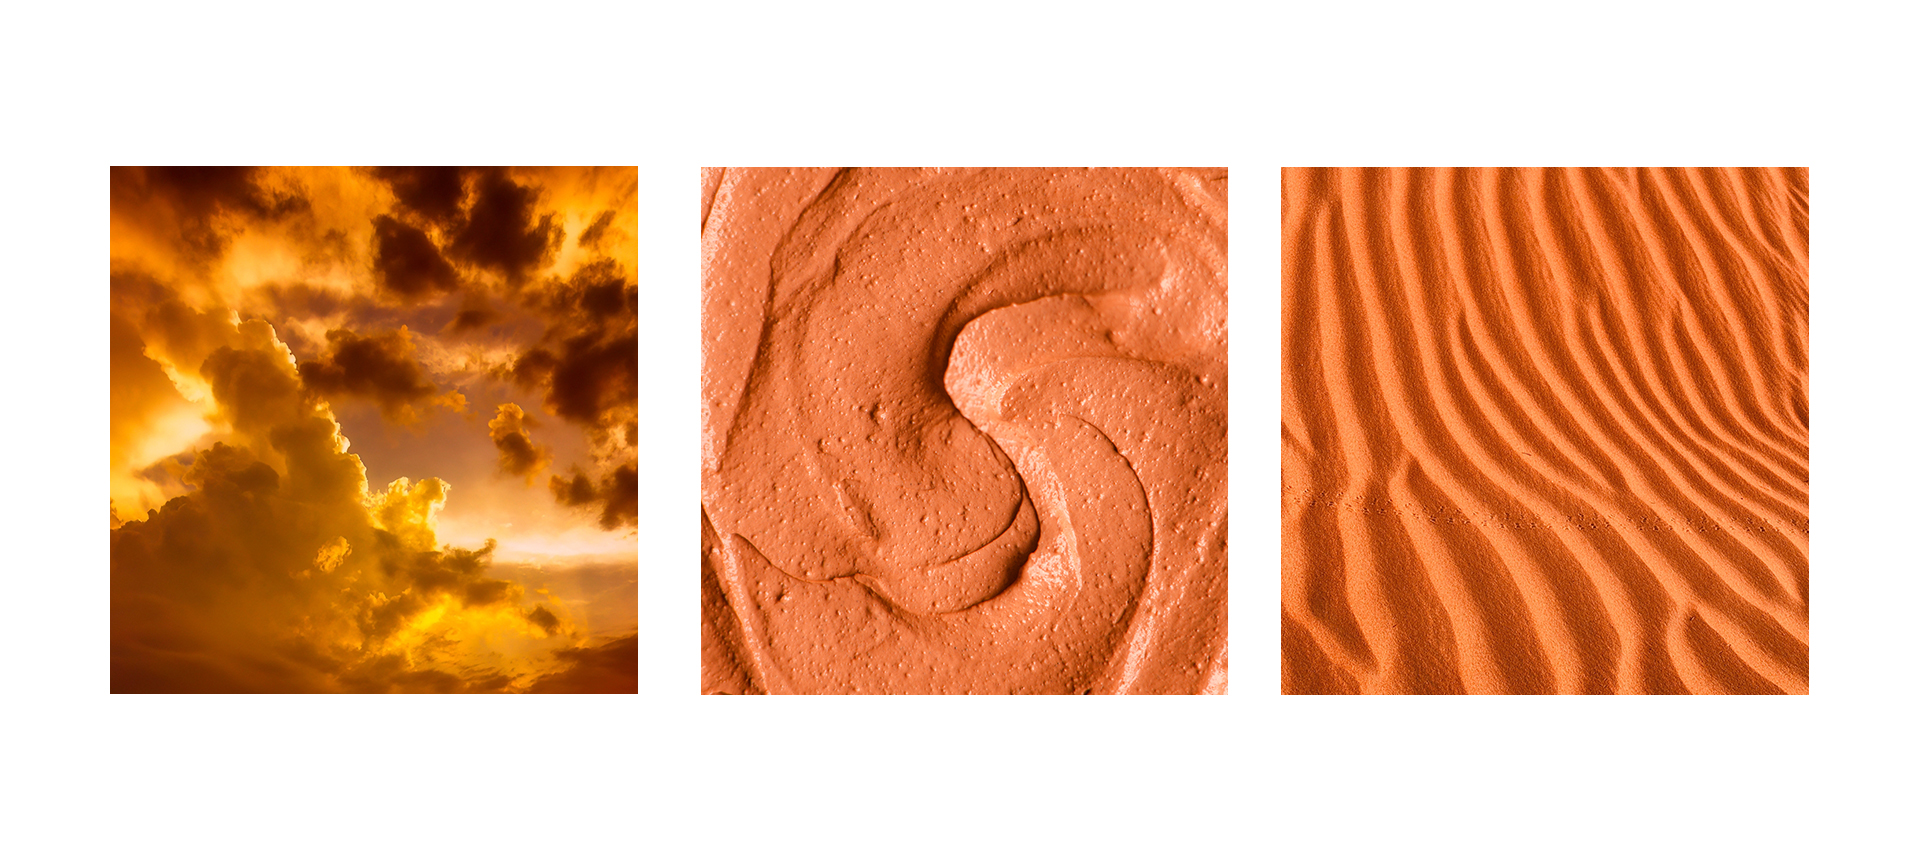 It Looks Like Burnt Orange is the New “It” Color | MyBoysen